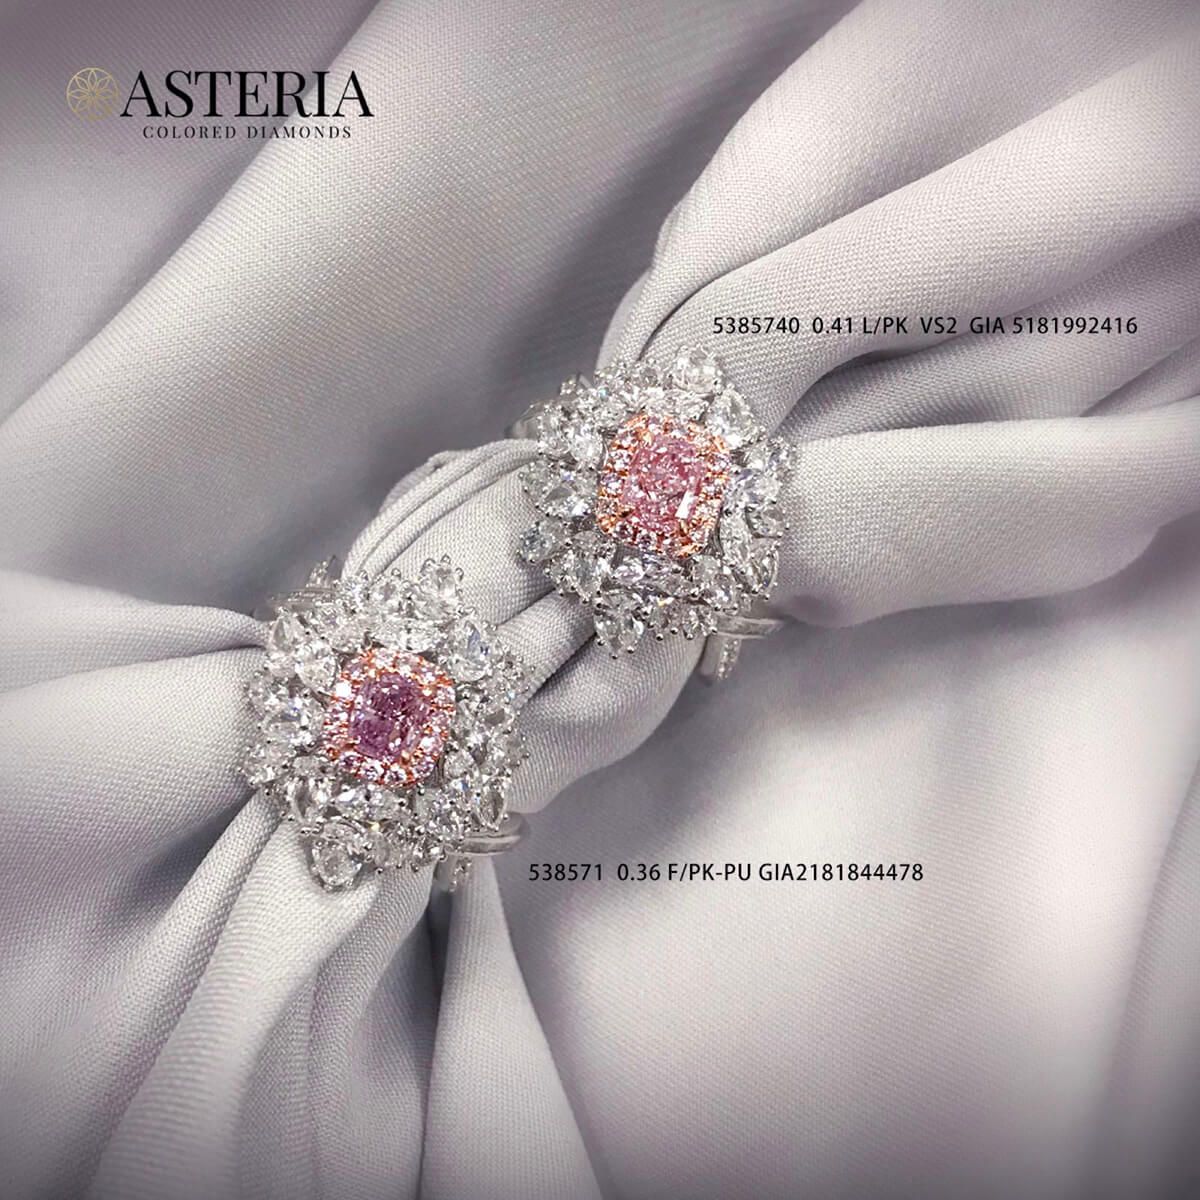 Fancy Pink Purple Diamond Ring, 0.36 Ct. (2.44 Ct. TW), Cushion shape, GIA Certified, 2181844478